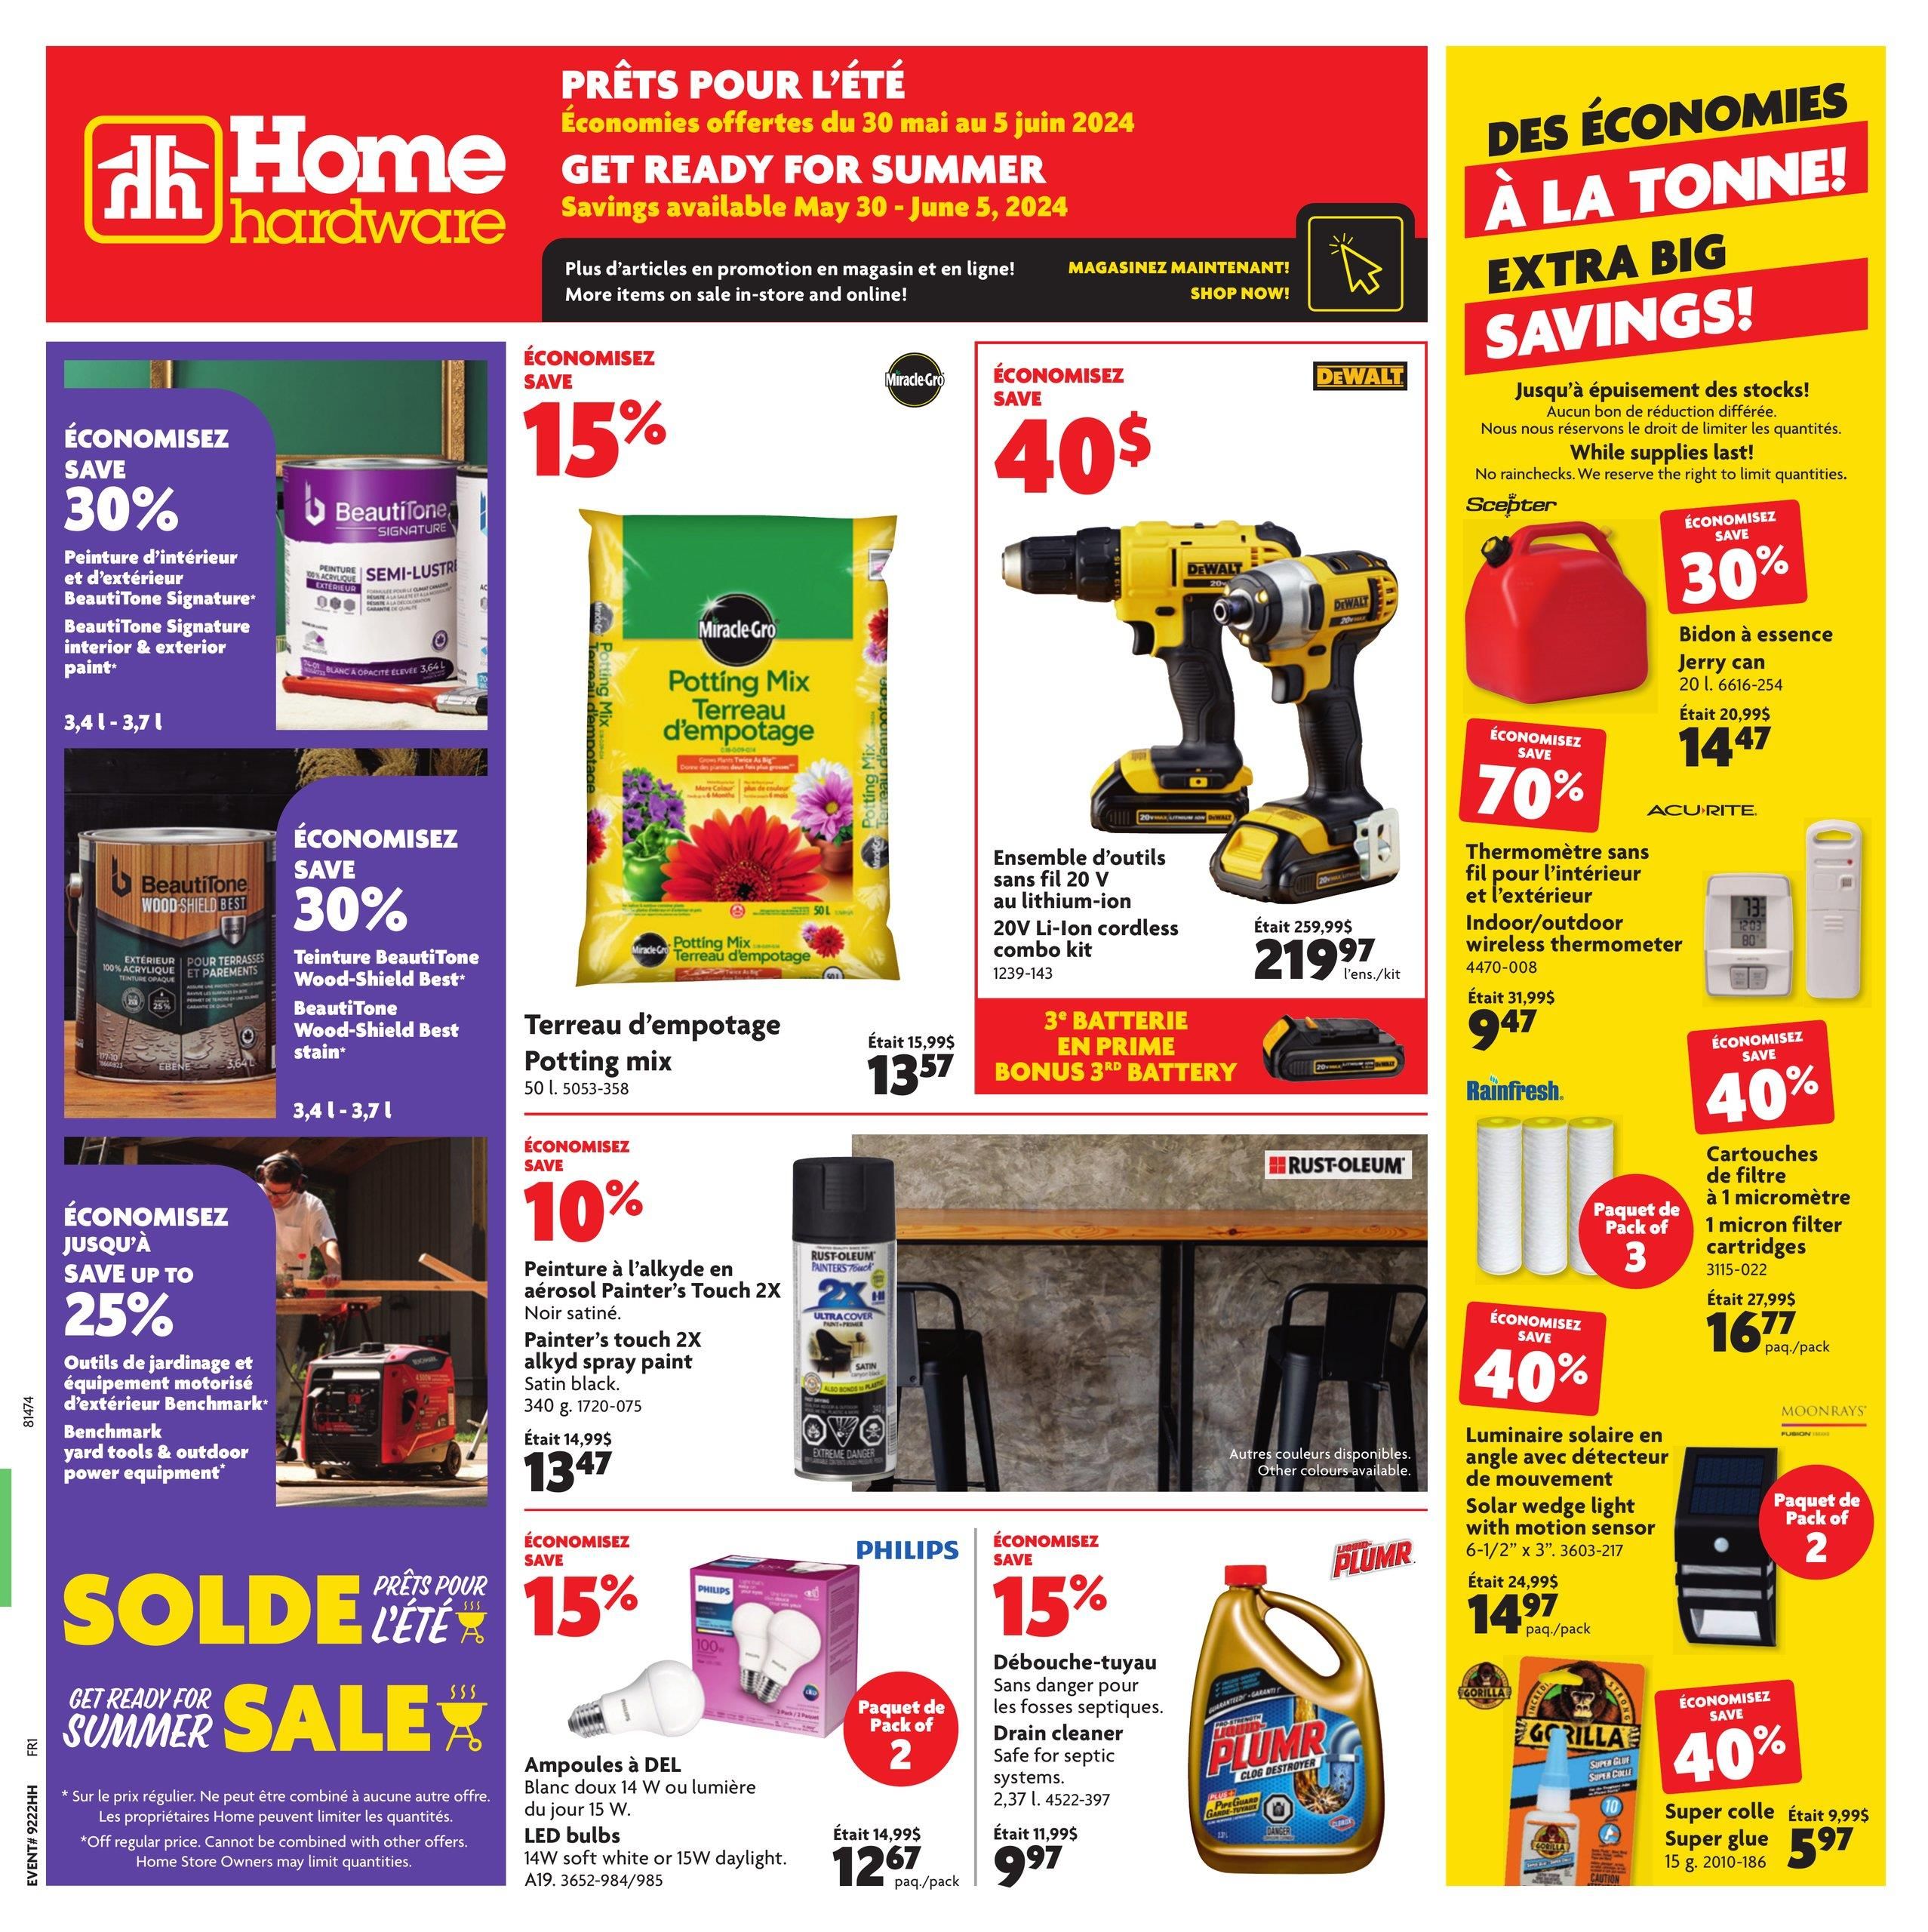 Home Hardware - Quebec - Weekly Flyer Specials